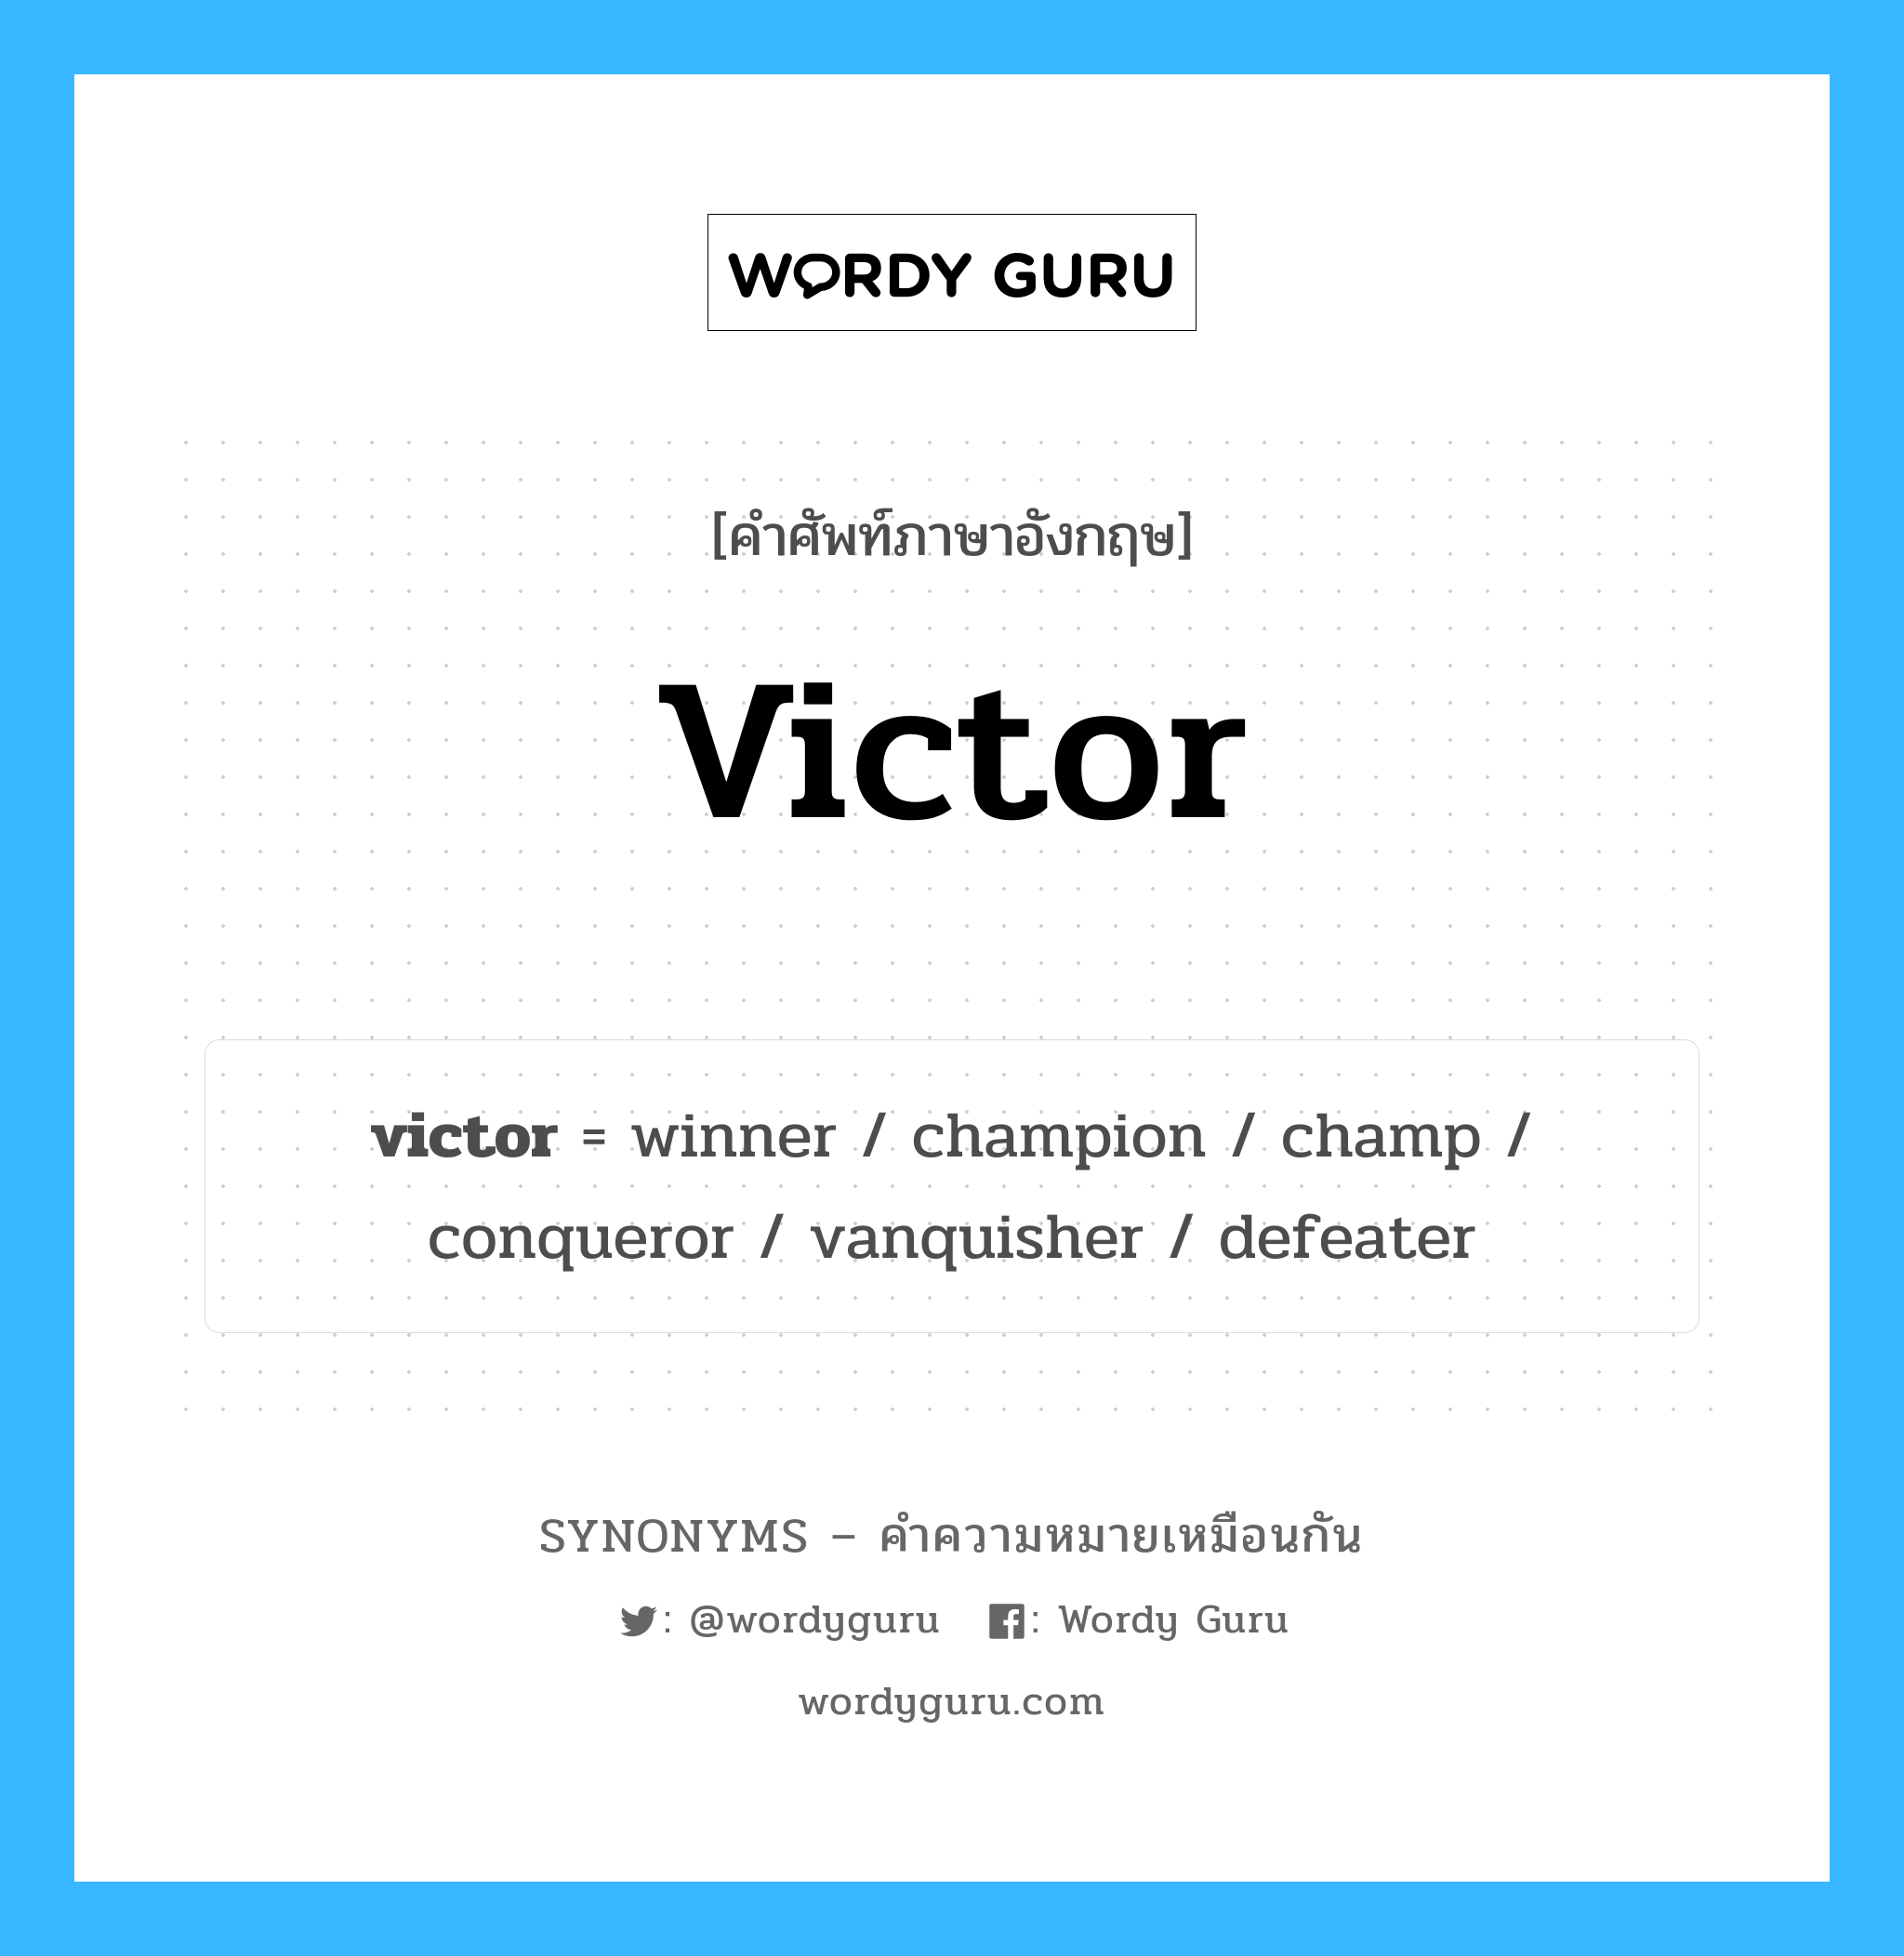 champion เป็นหนึ่งใน victor และมีคำอื่น ๆ อีกดังนี้, คำศัพท์ภาษาอังกฤษ champion ความหมายคล้ายกันกับ victor แปลว่า แชมป์ หมวด victor